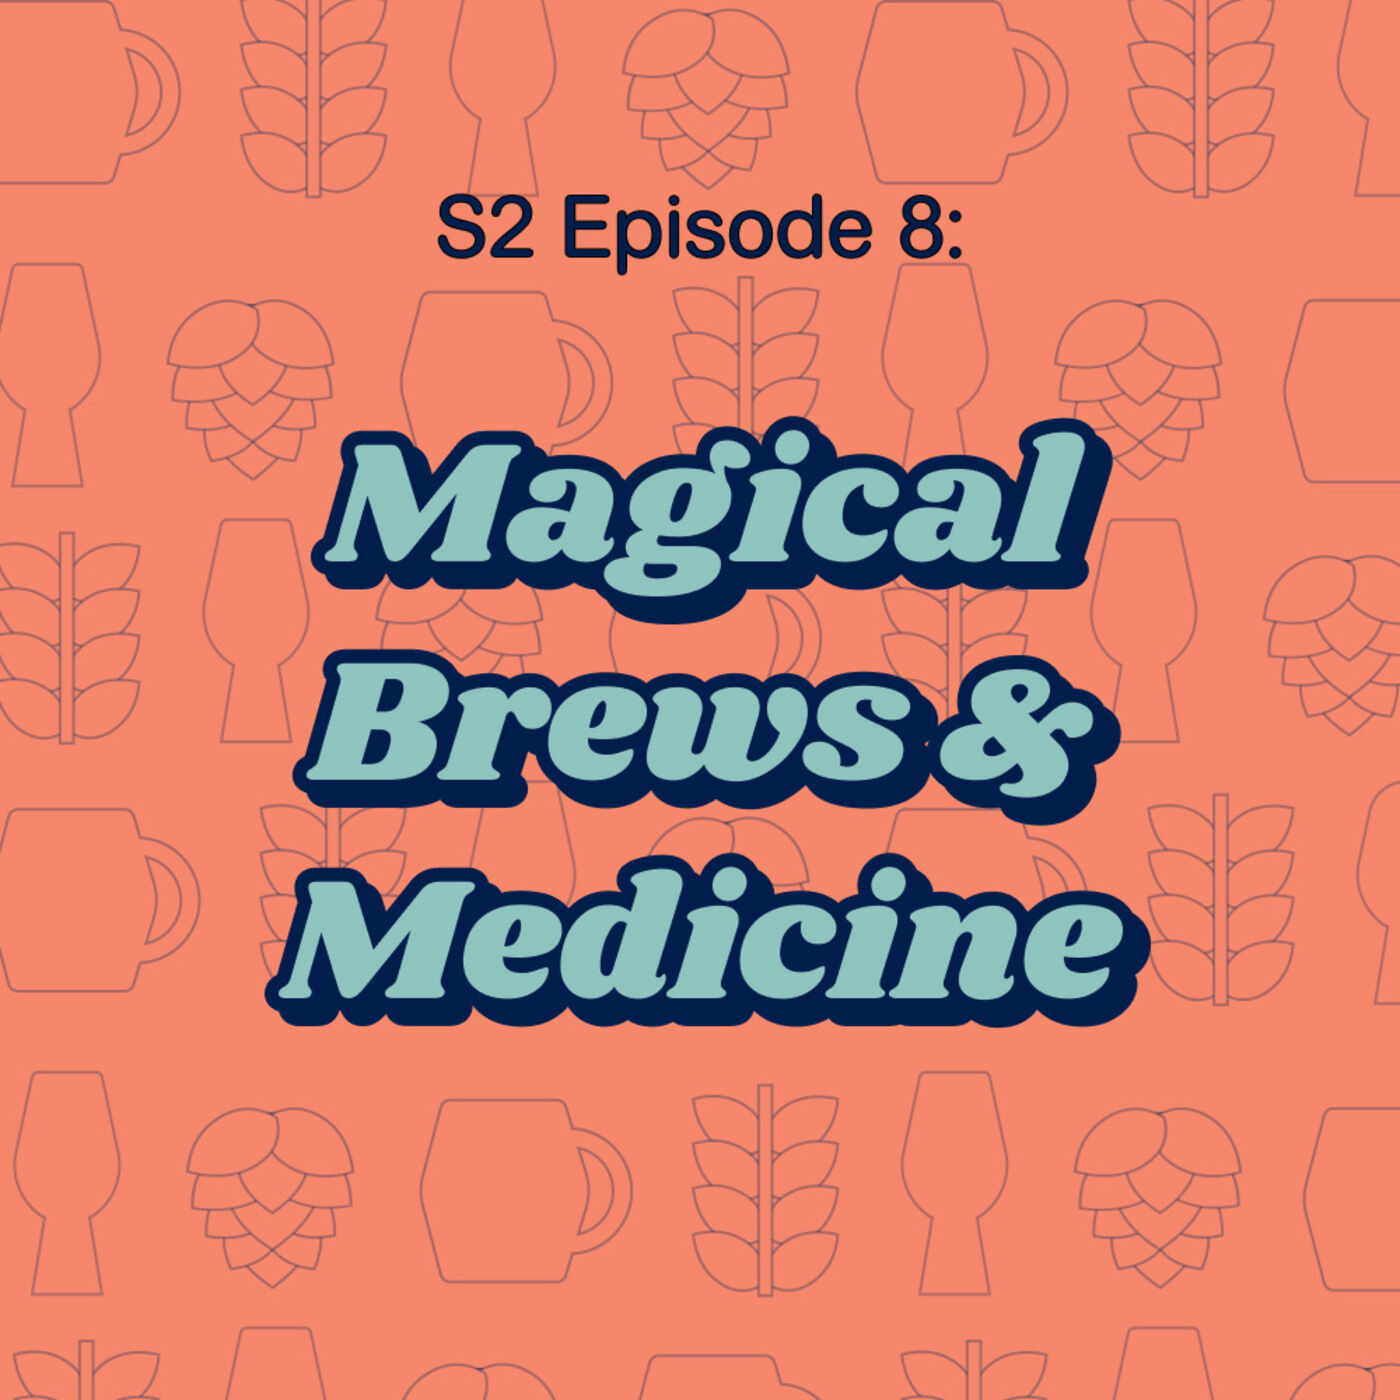 Magical Brews & Medicine